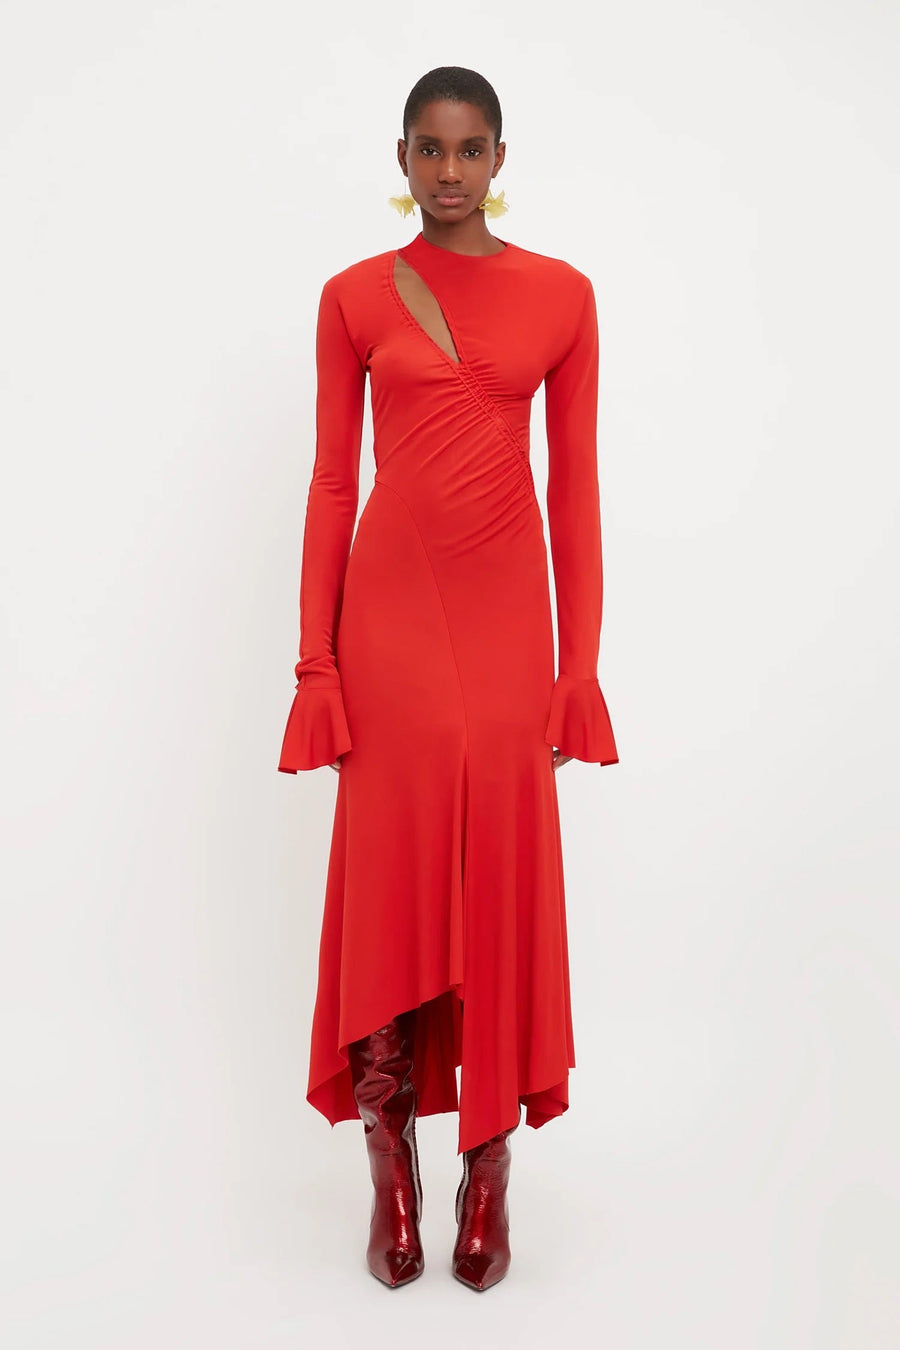 victoria beckham Asymmetric Slash Jersey Dress red figure front